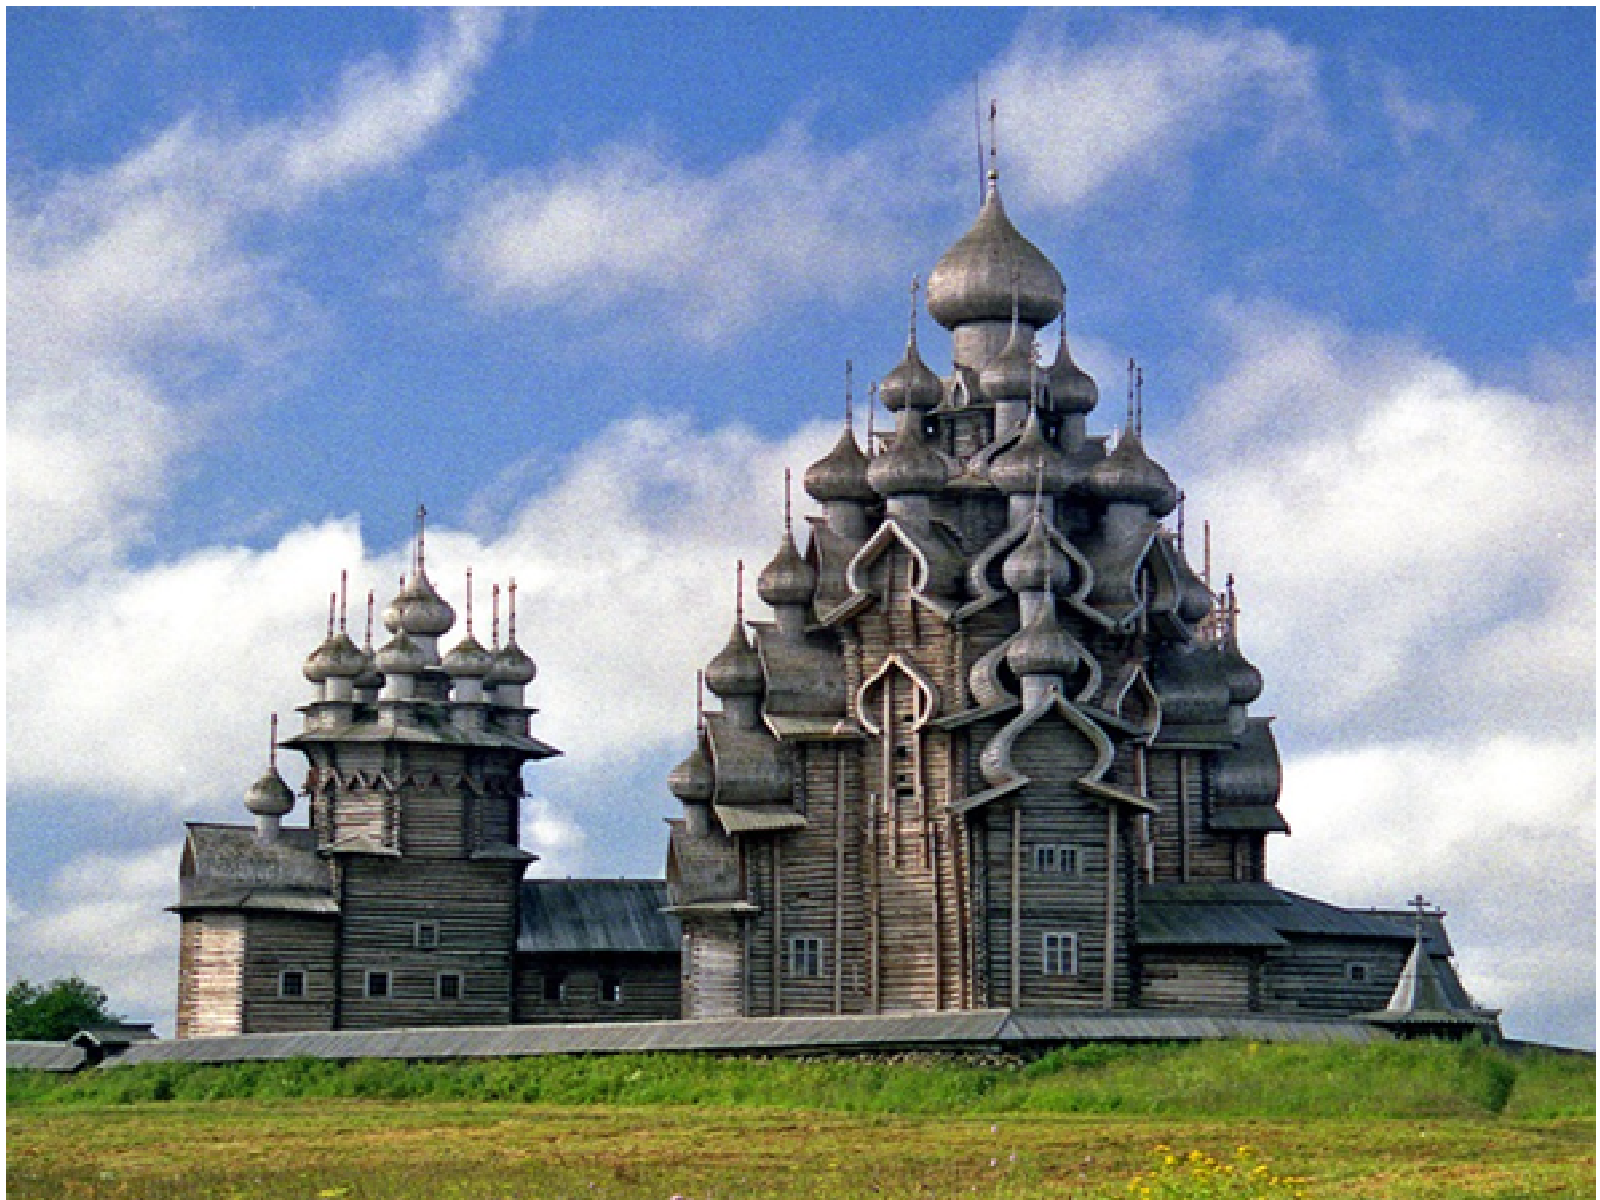 The Transfiguration Church, Russia